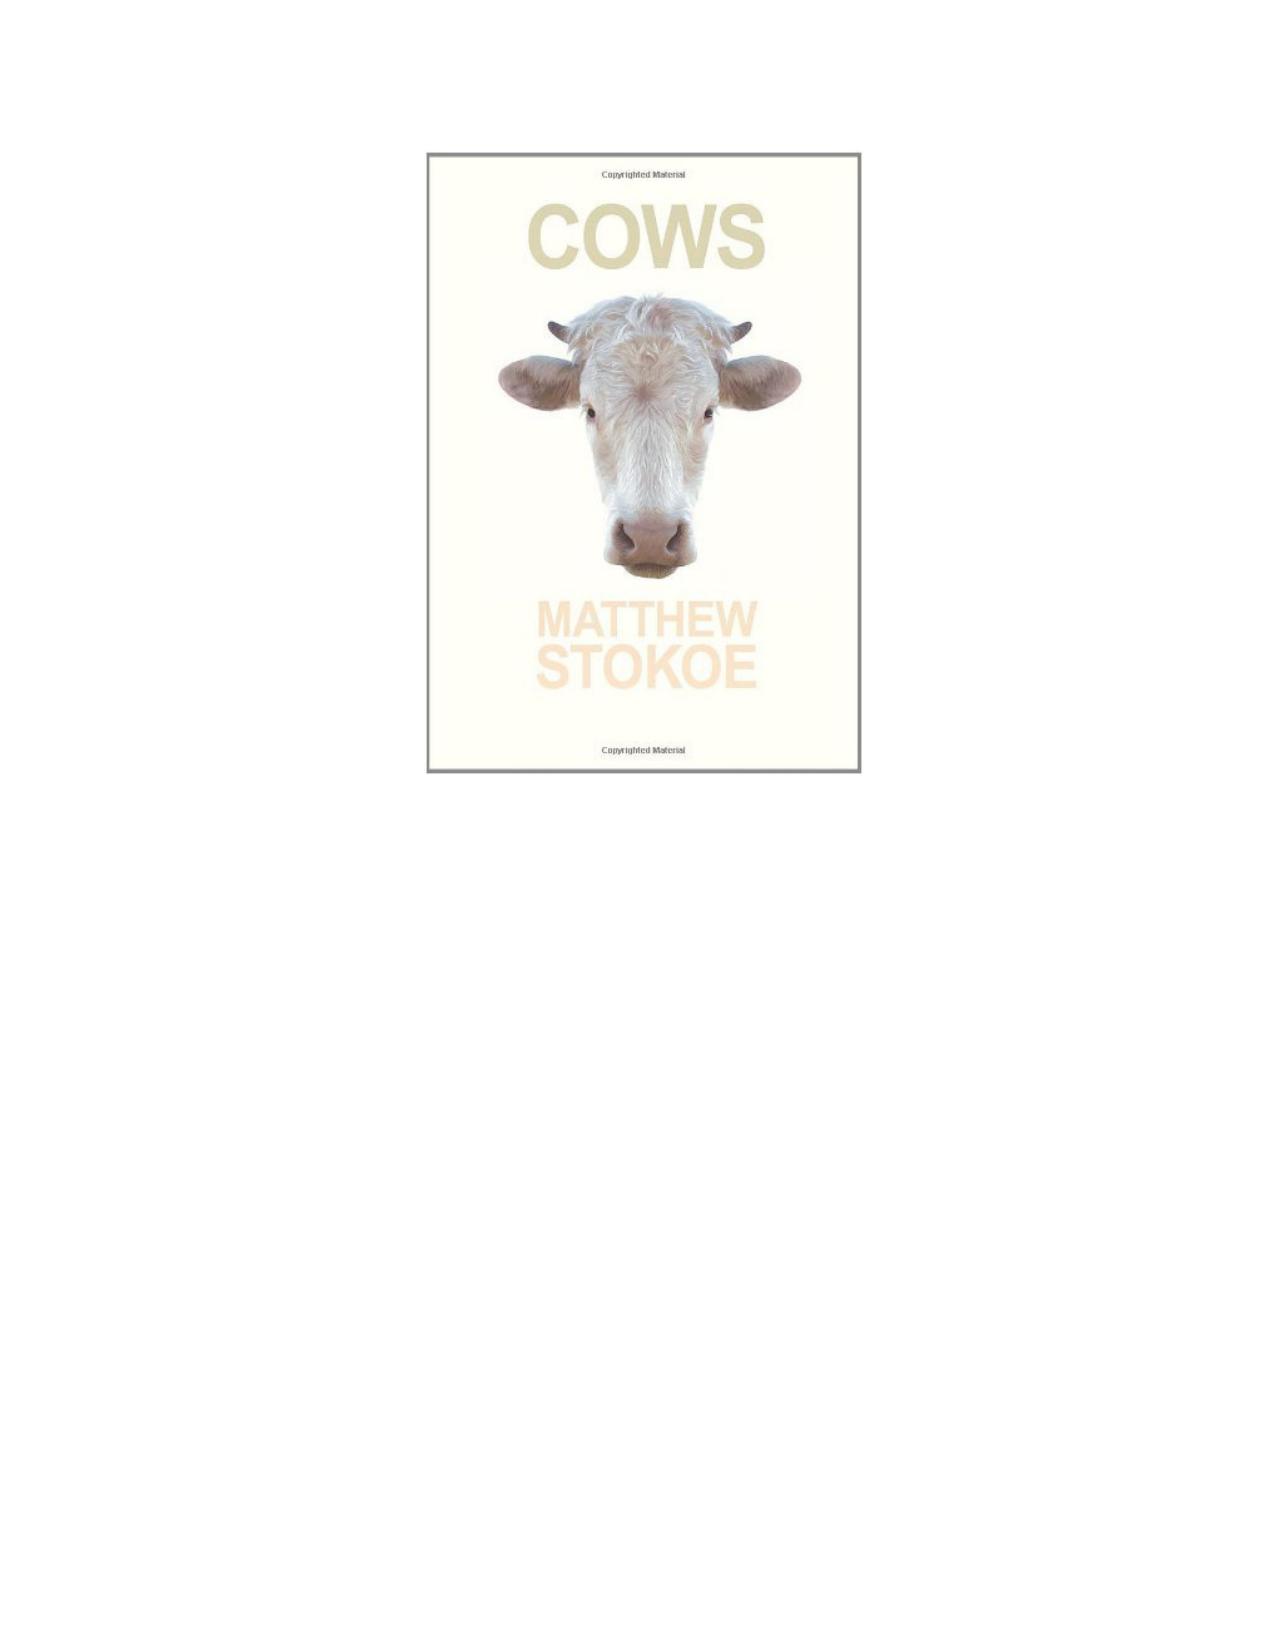 Cows by Stokoe Matthew